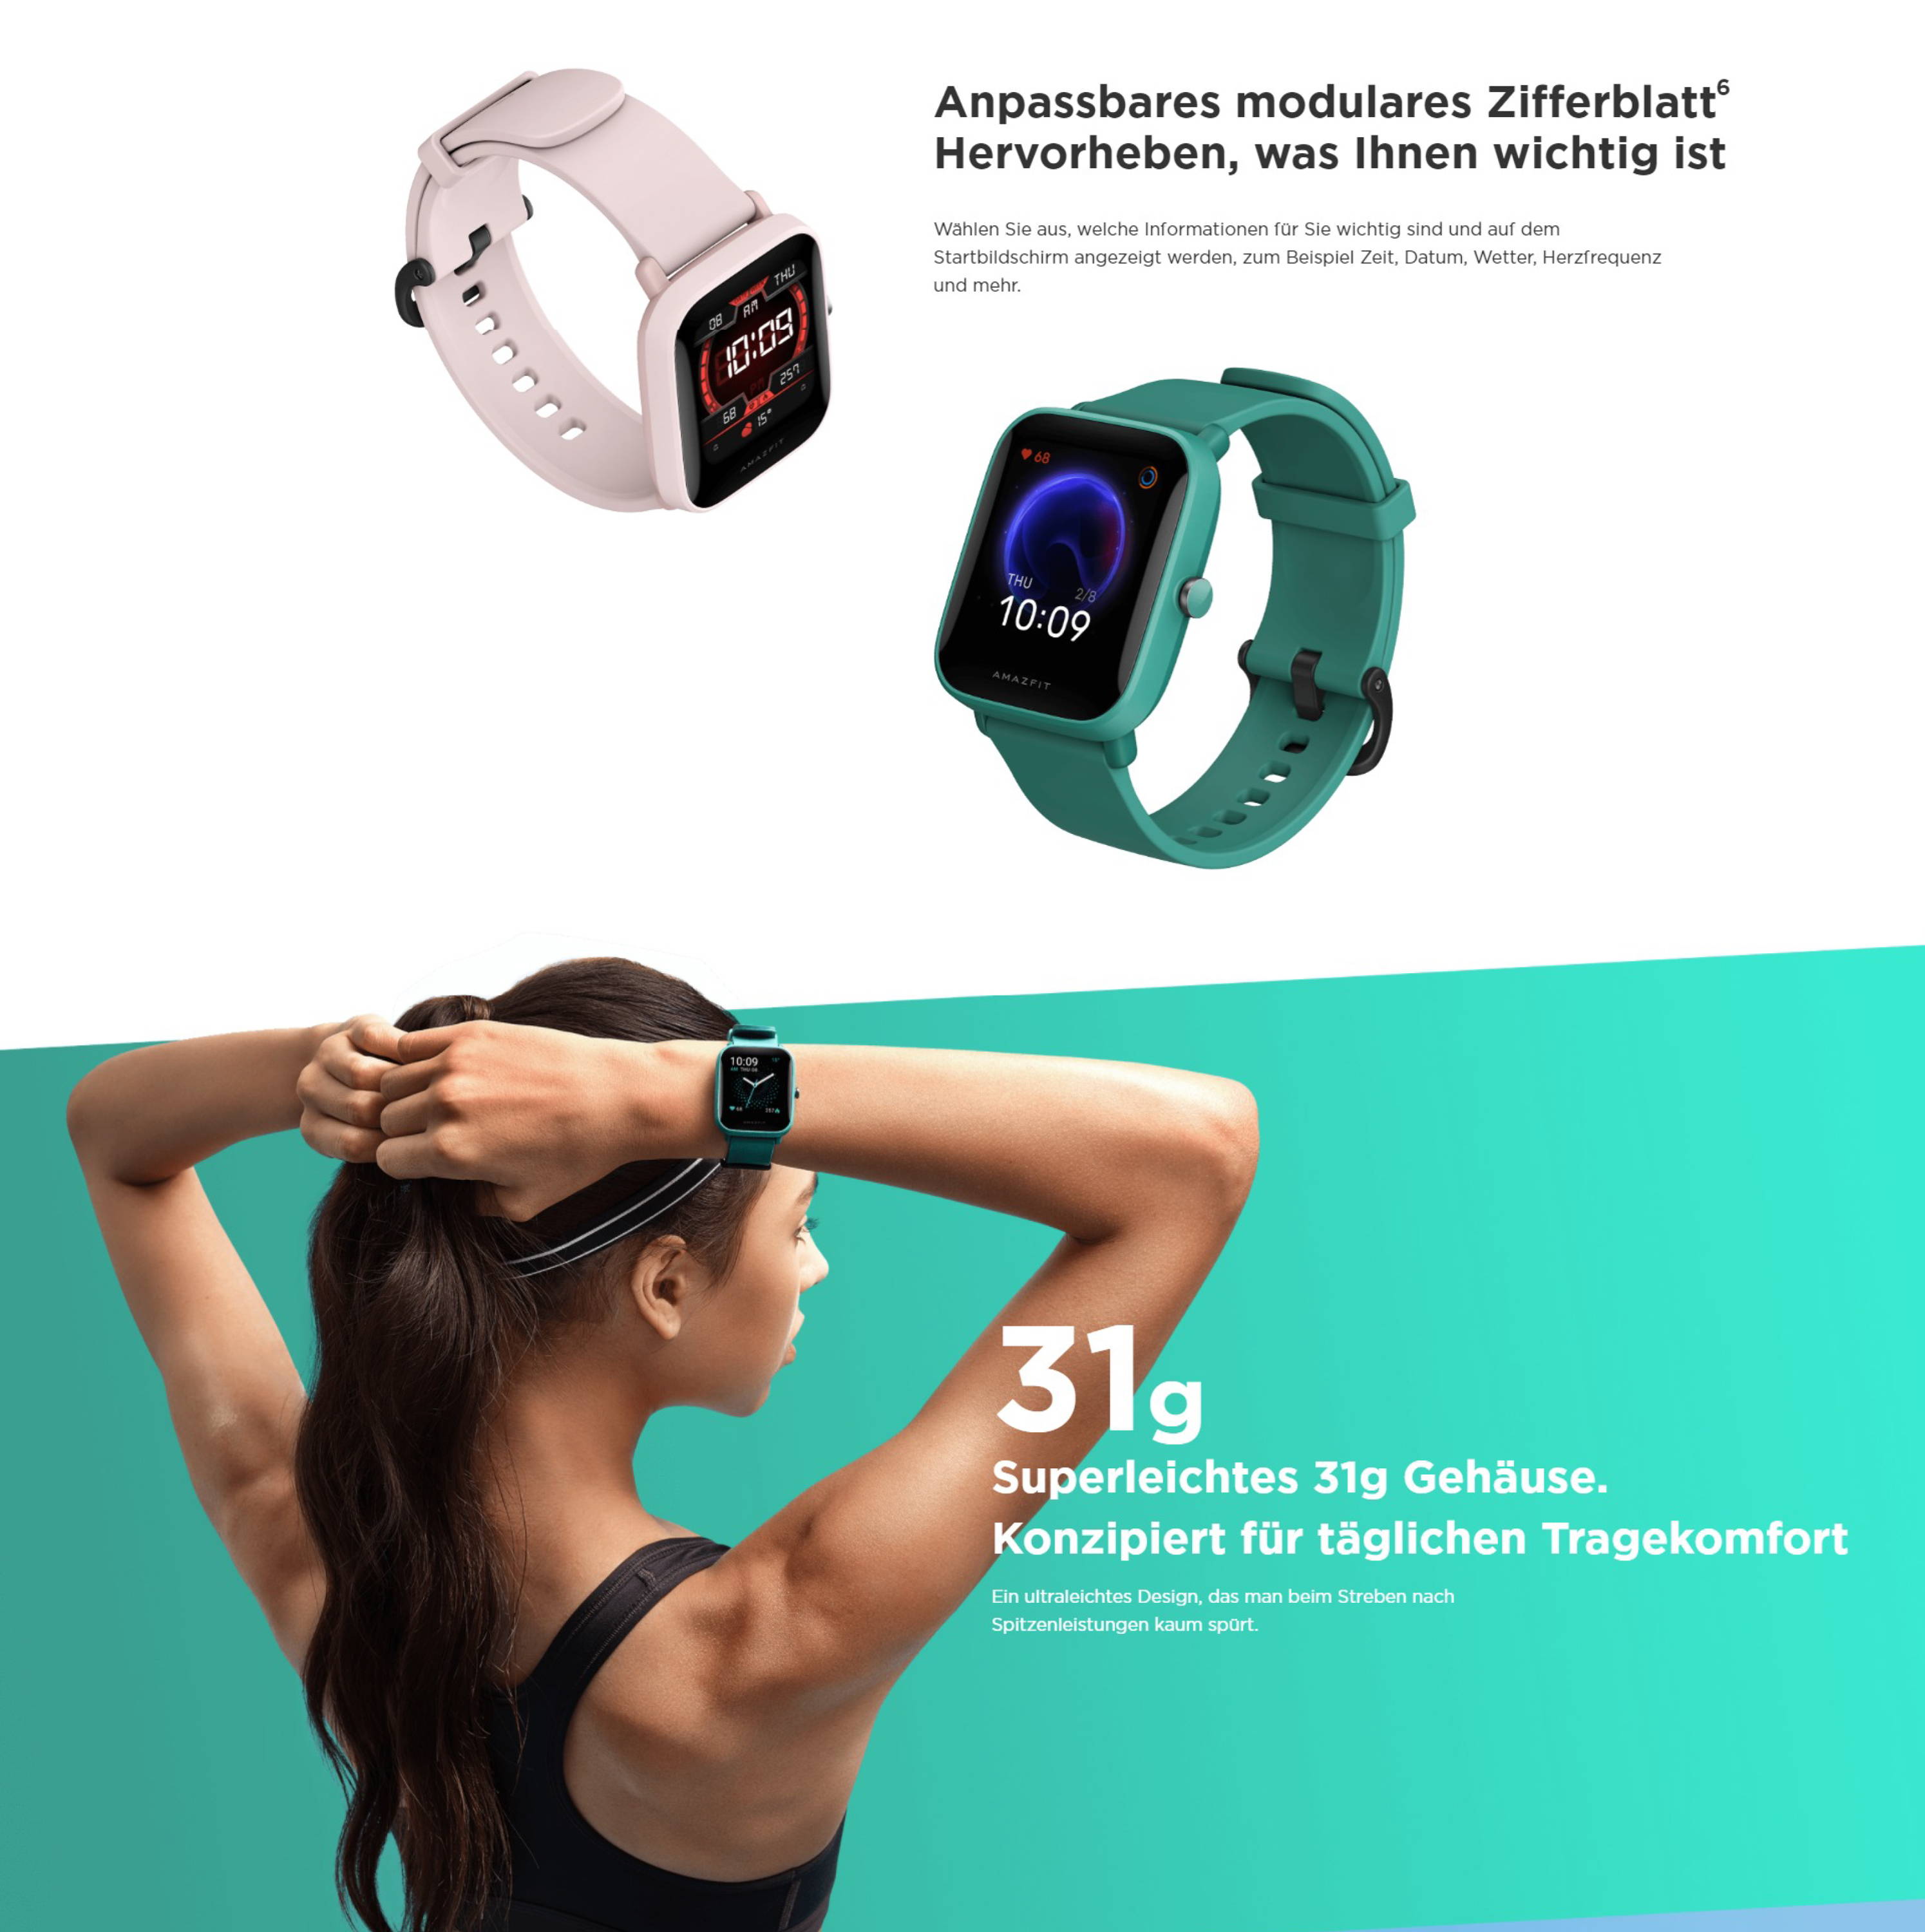 Smartwatch Amazfit Bip U Pro com Alexa integrado, GPS, 5atm à prova d'água  - Tecnobyte Shop